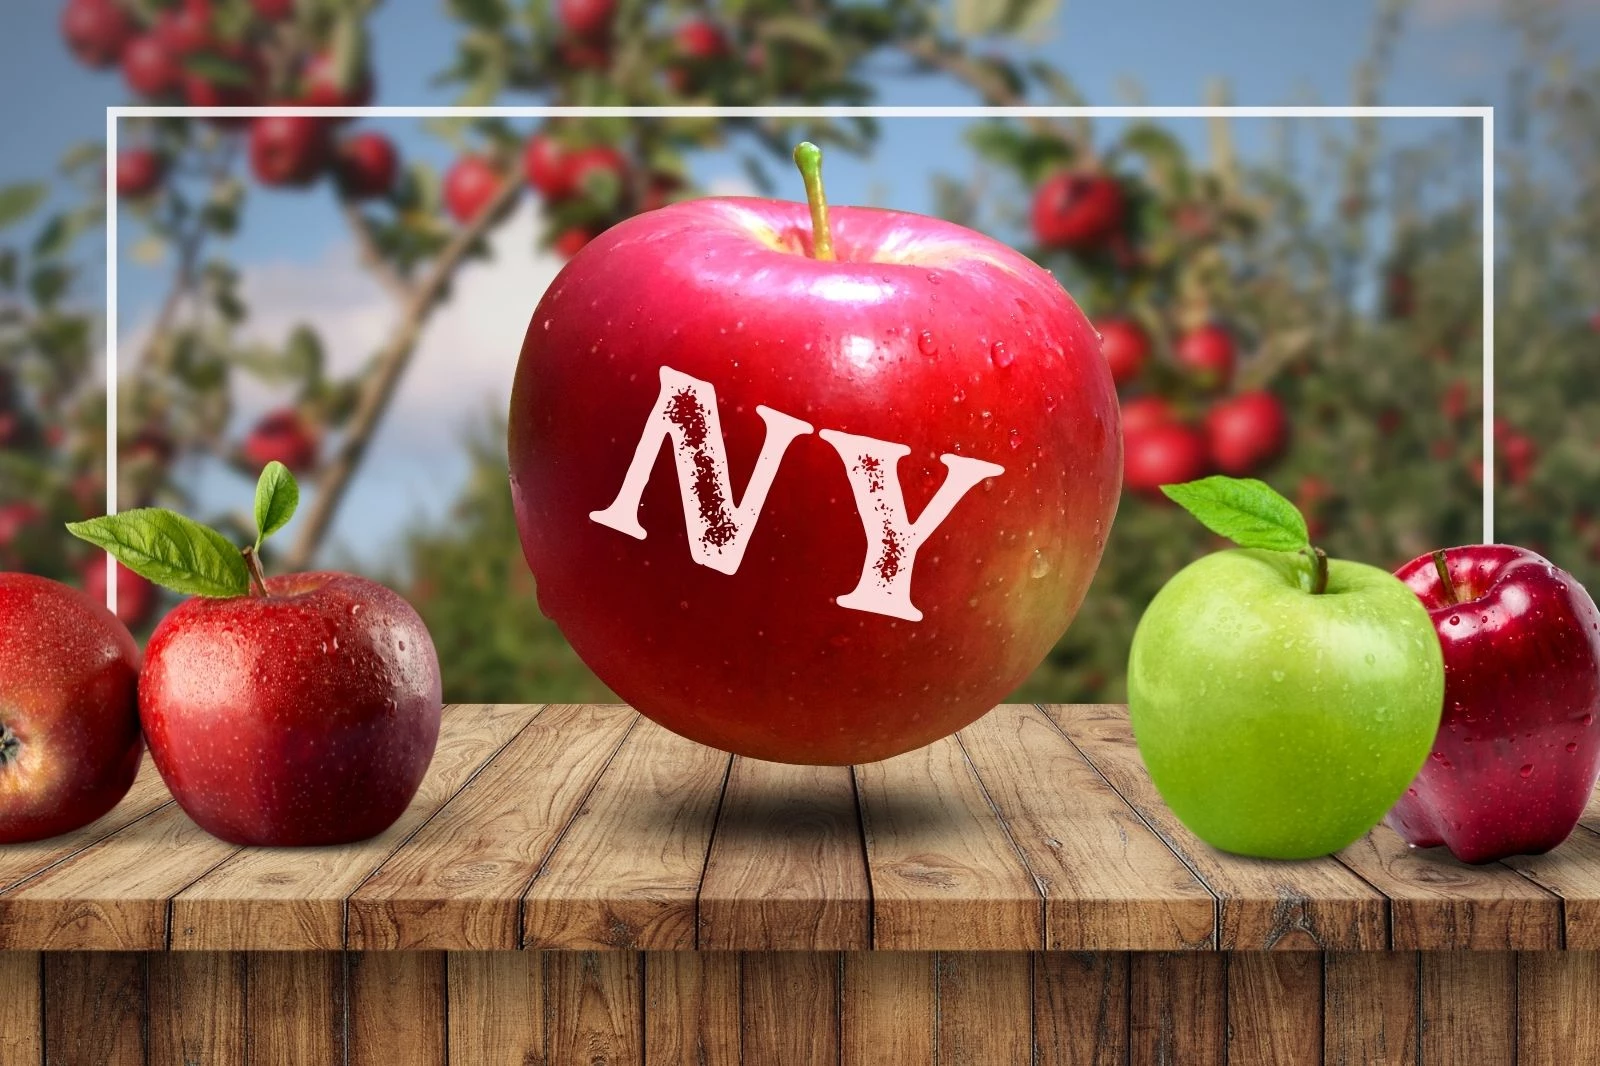 Cortland - New York Apple Association